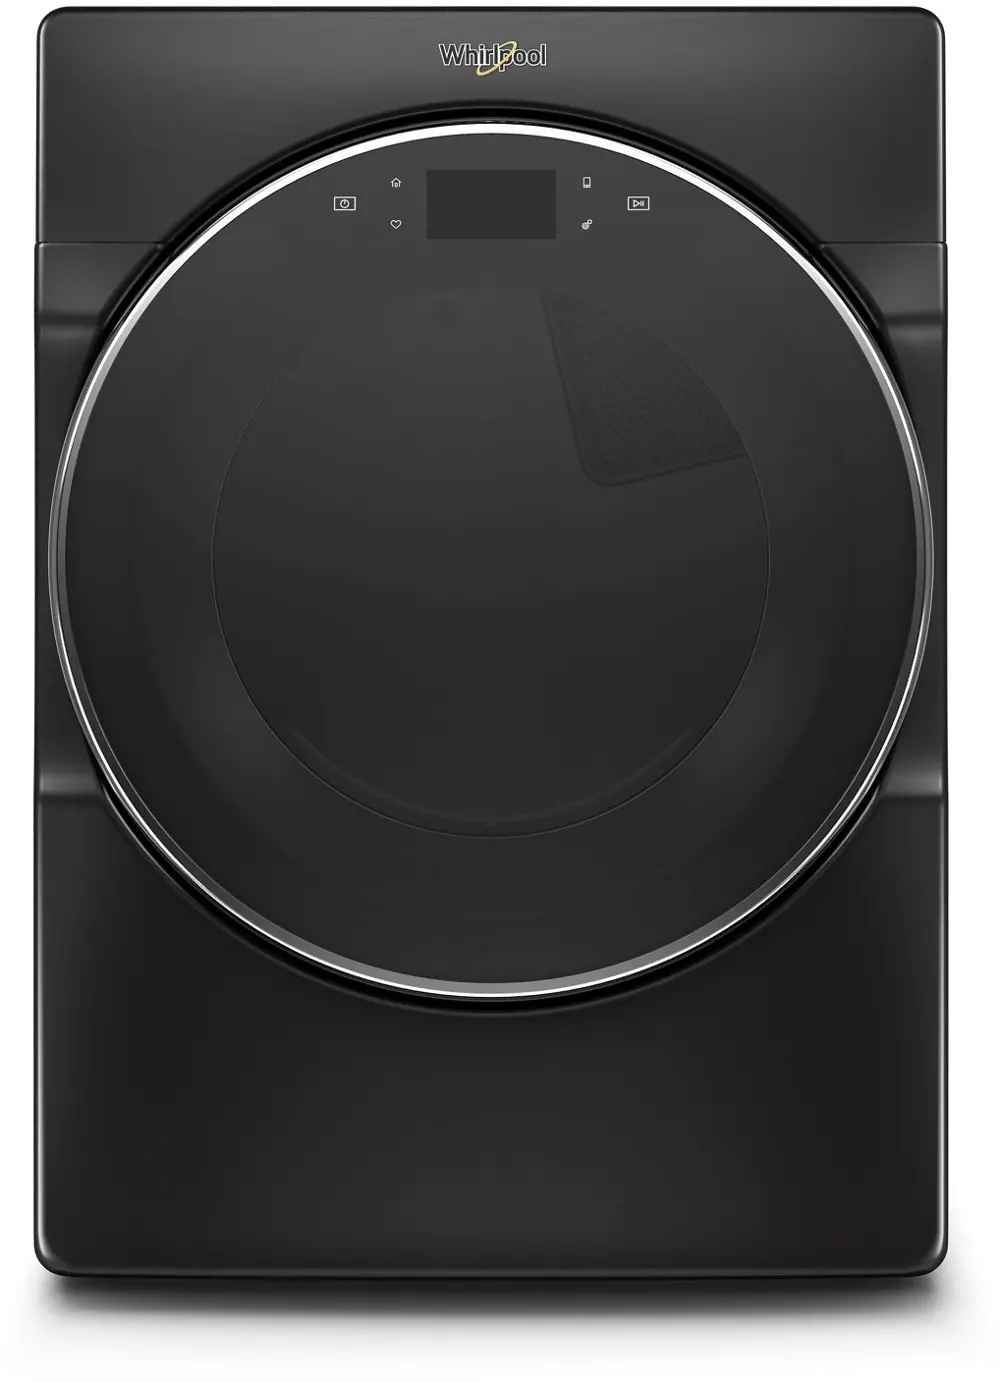 WED9620HBK Whirlpool 7.4 cu. ft. Smart Front Load Electric Dryer - Black-1